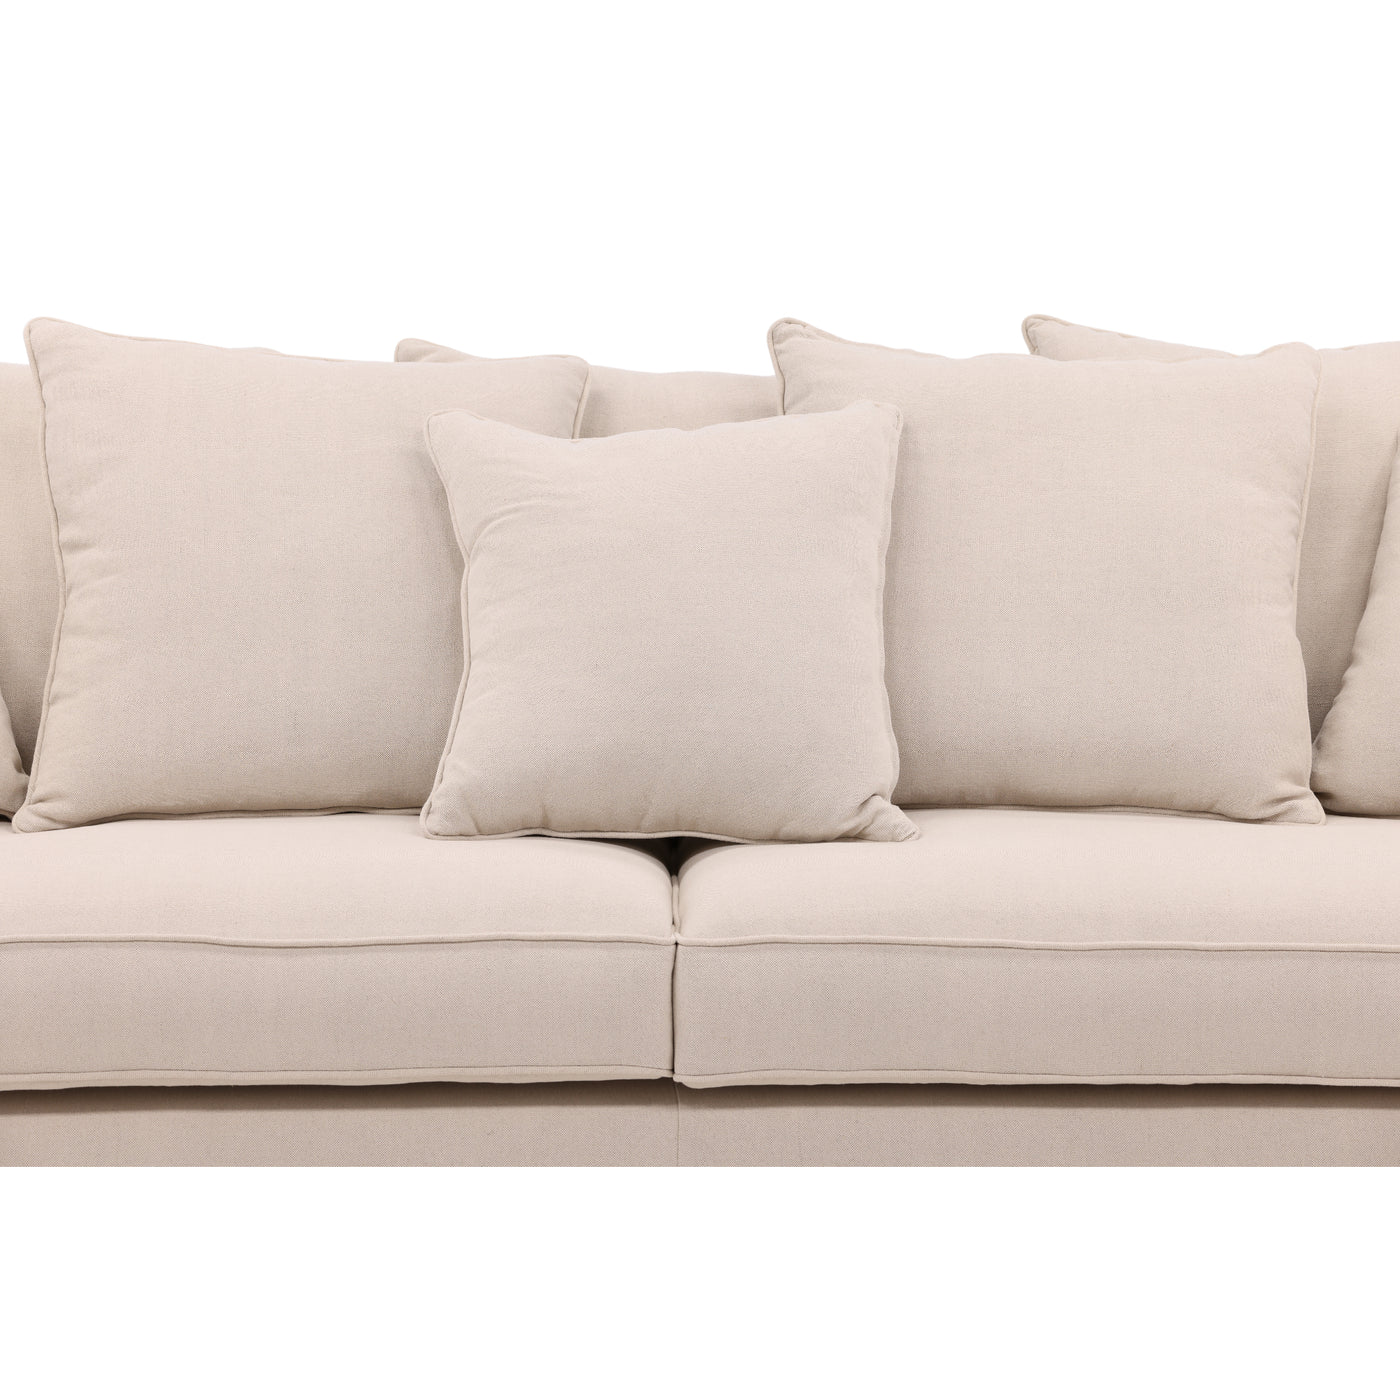 Sofa Tiffany 2-Sitzer –Beige